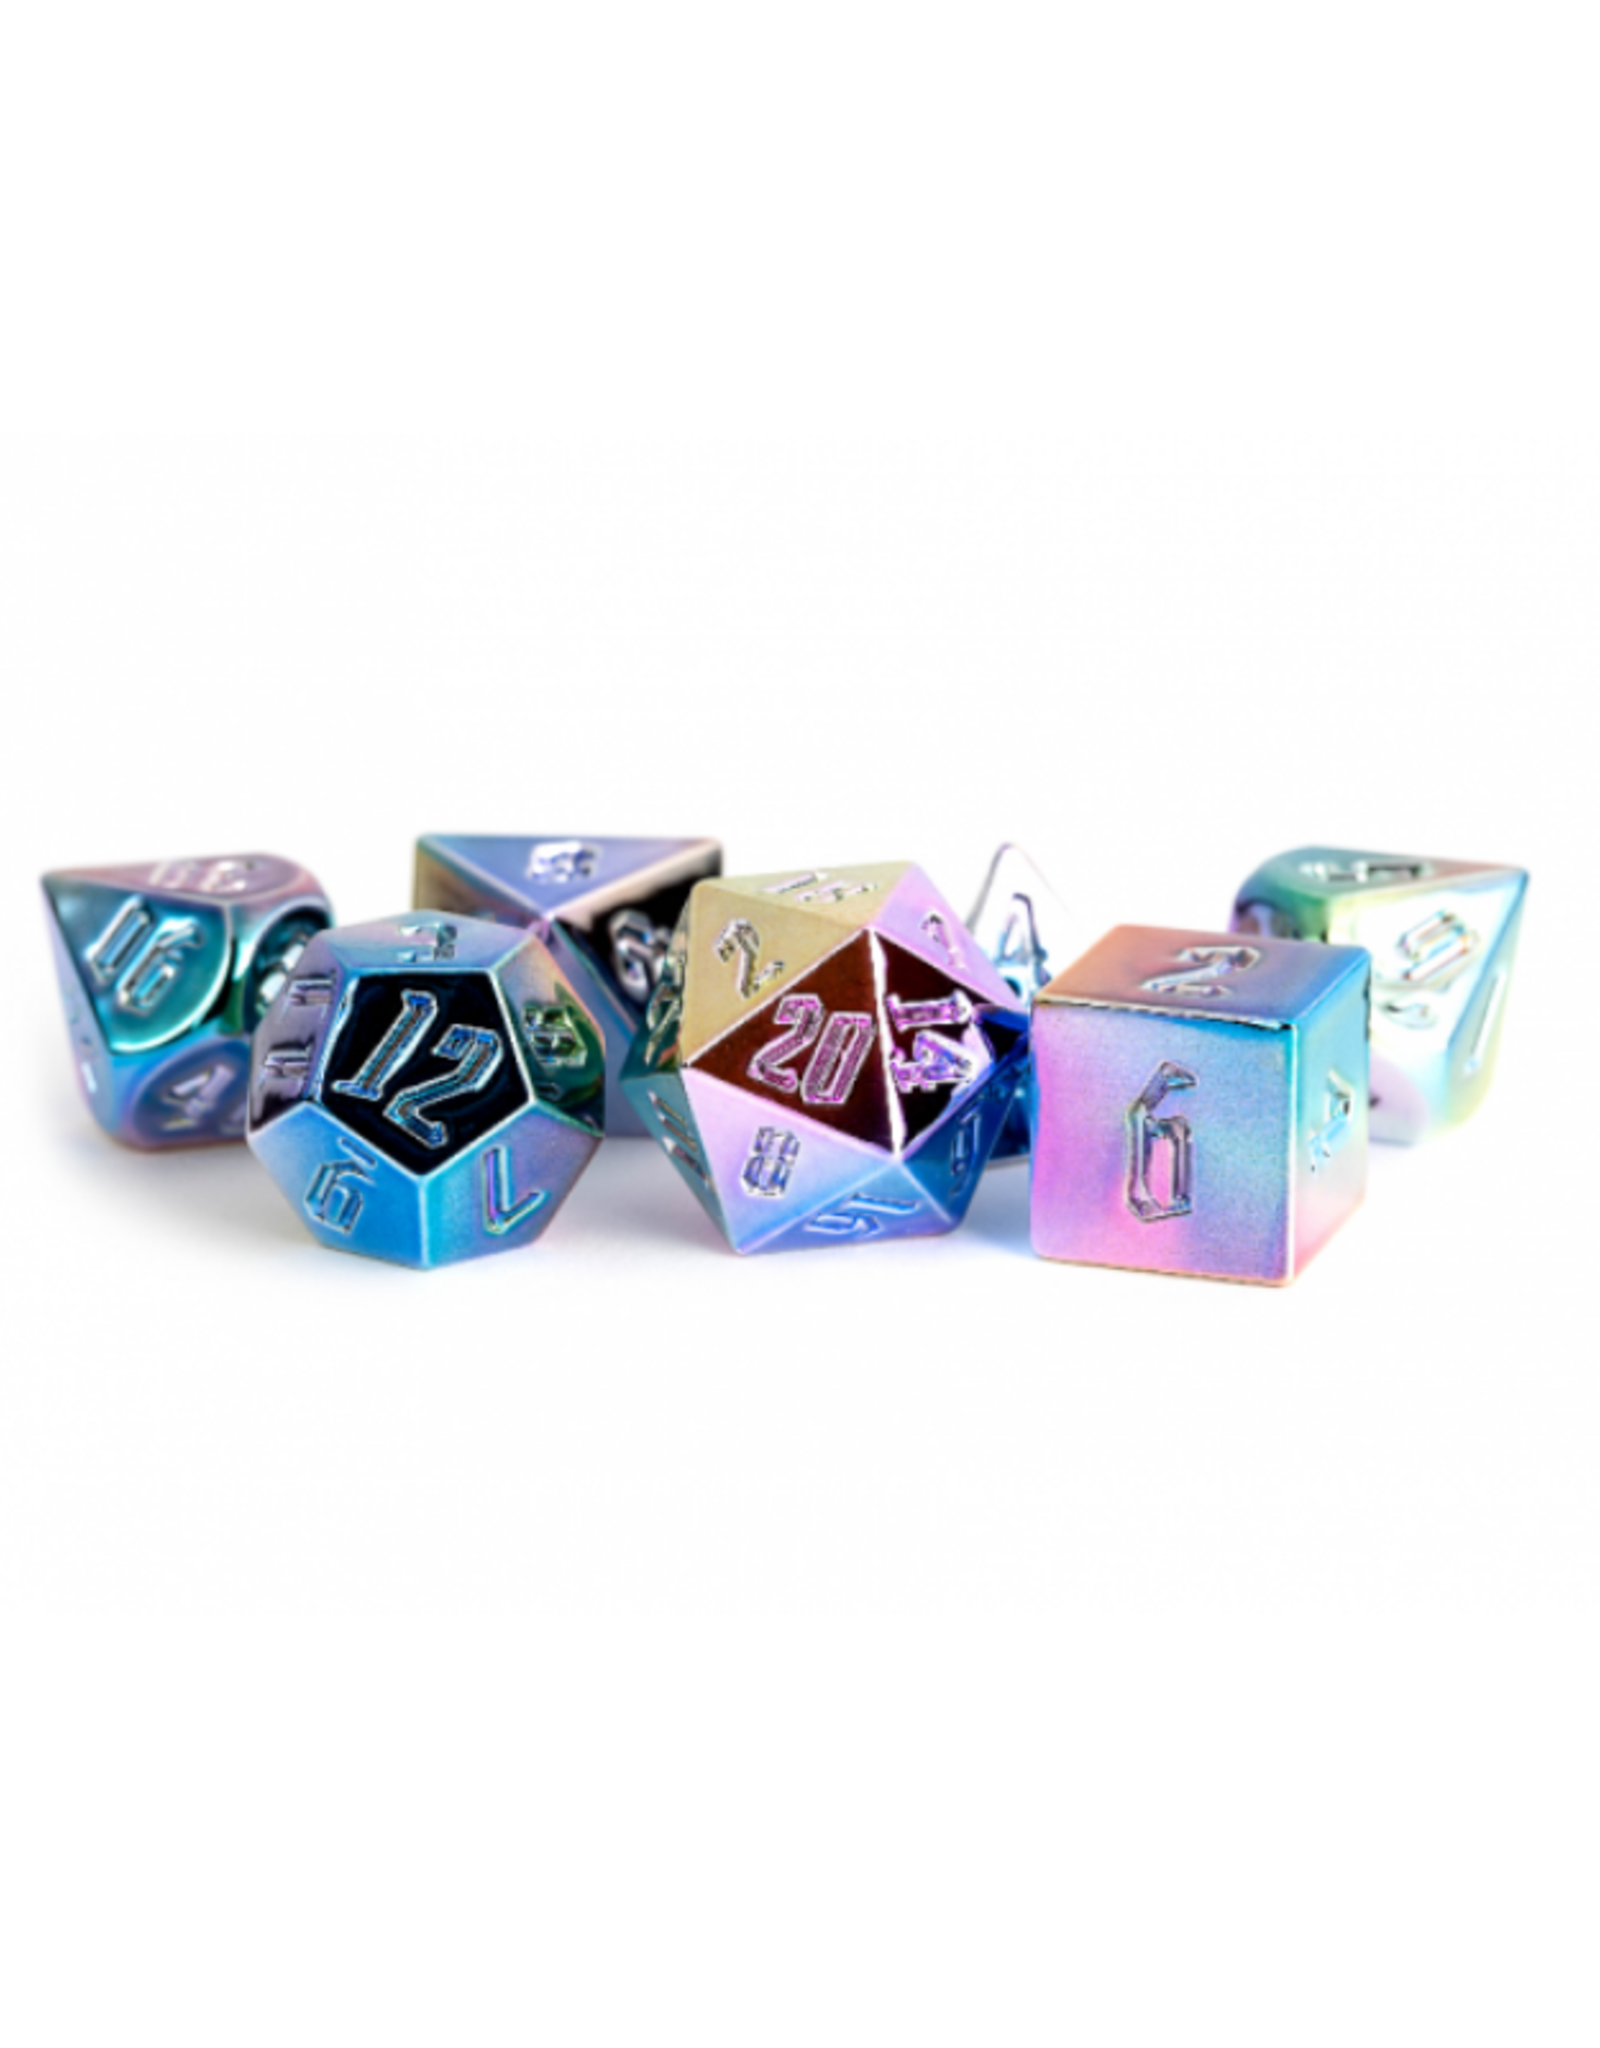 Polyhedral Metal Dice Set (Aegis Rainbow Uninked)